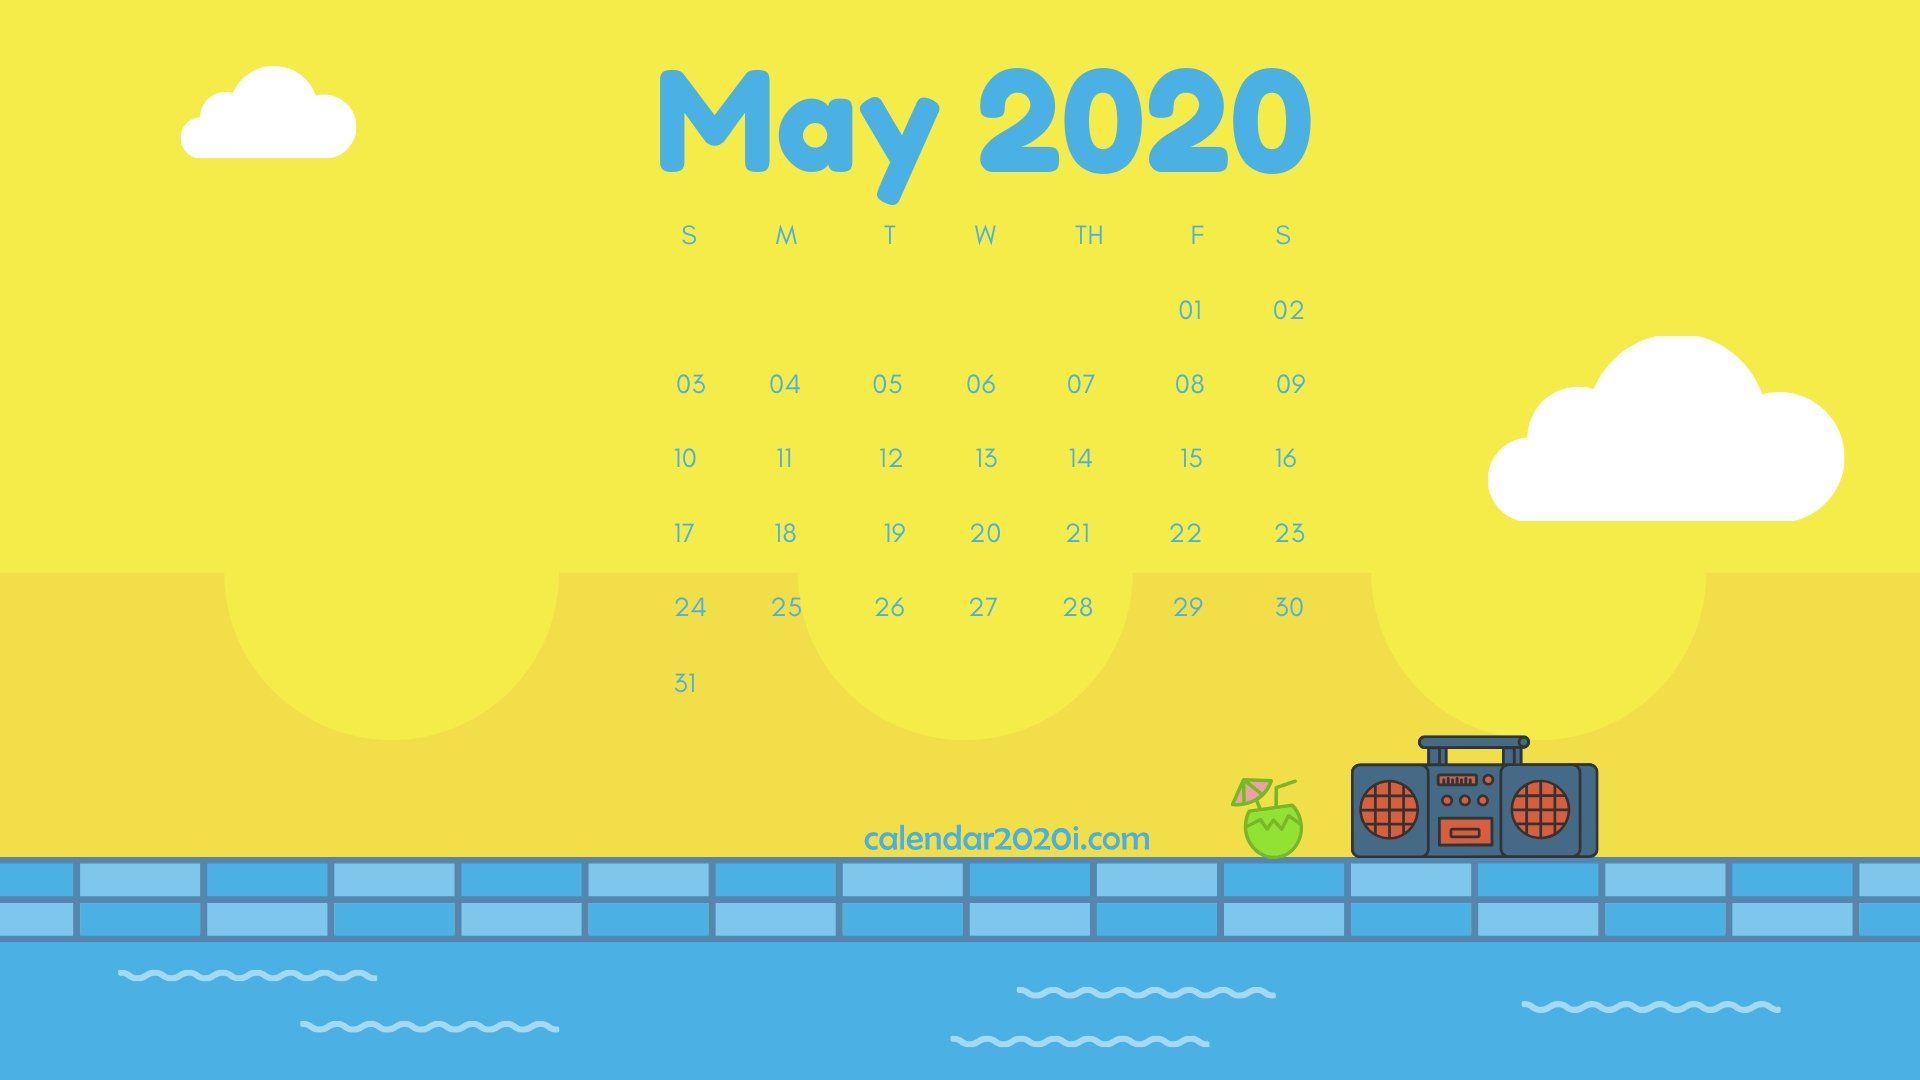 Cute May 2020 Calendar Wallpaper For Desk Floral Designs